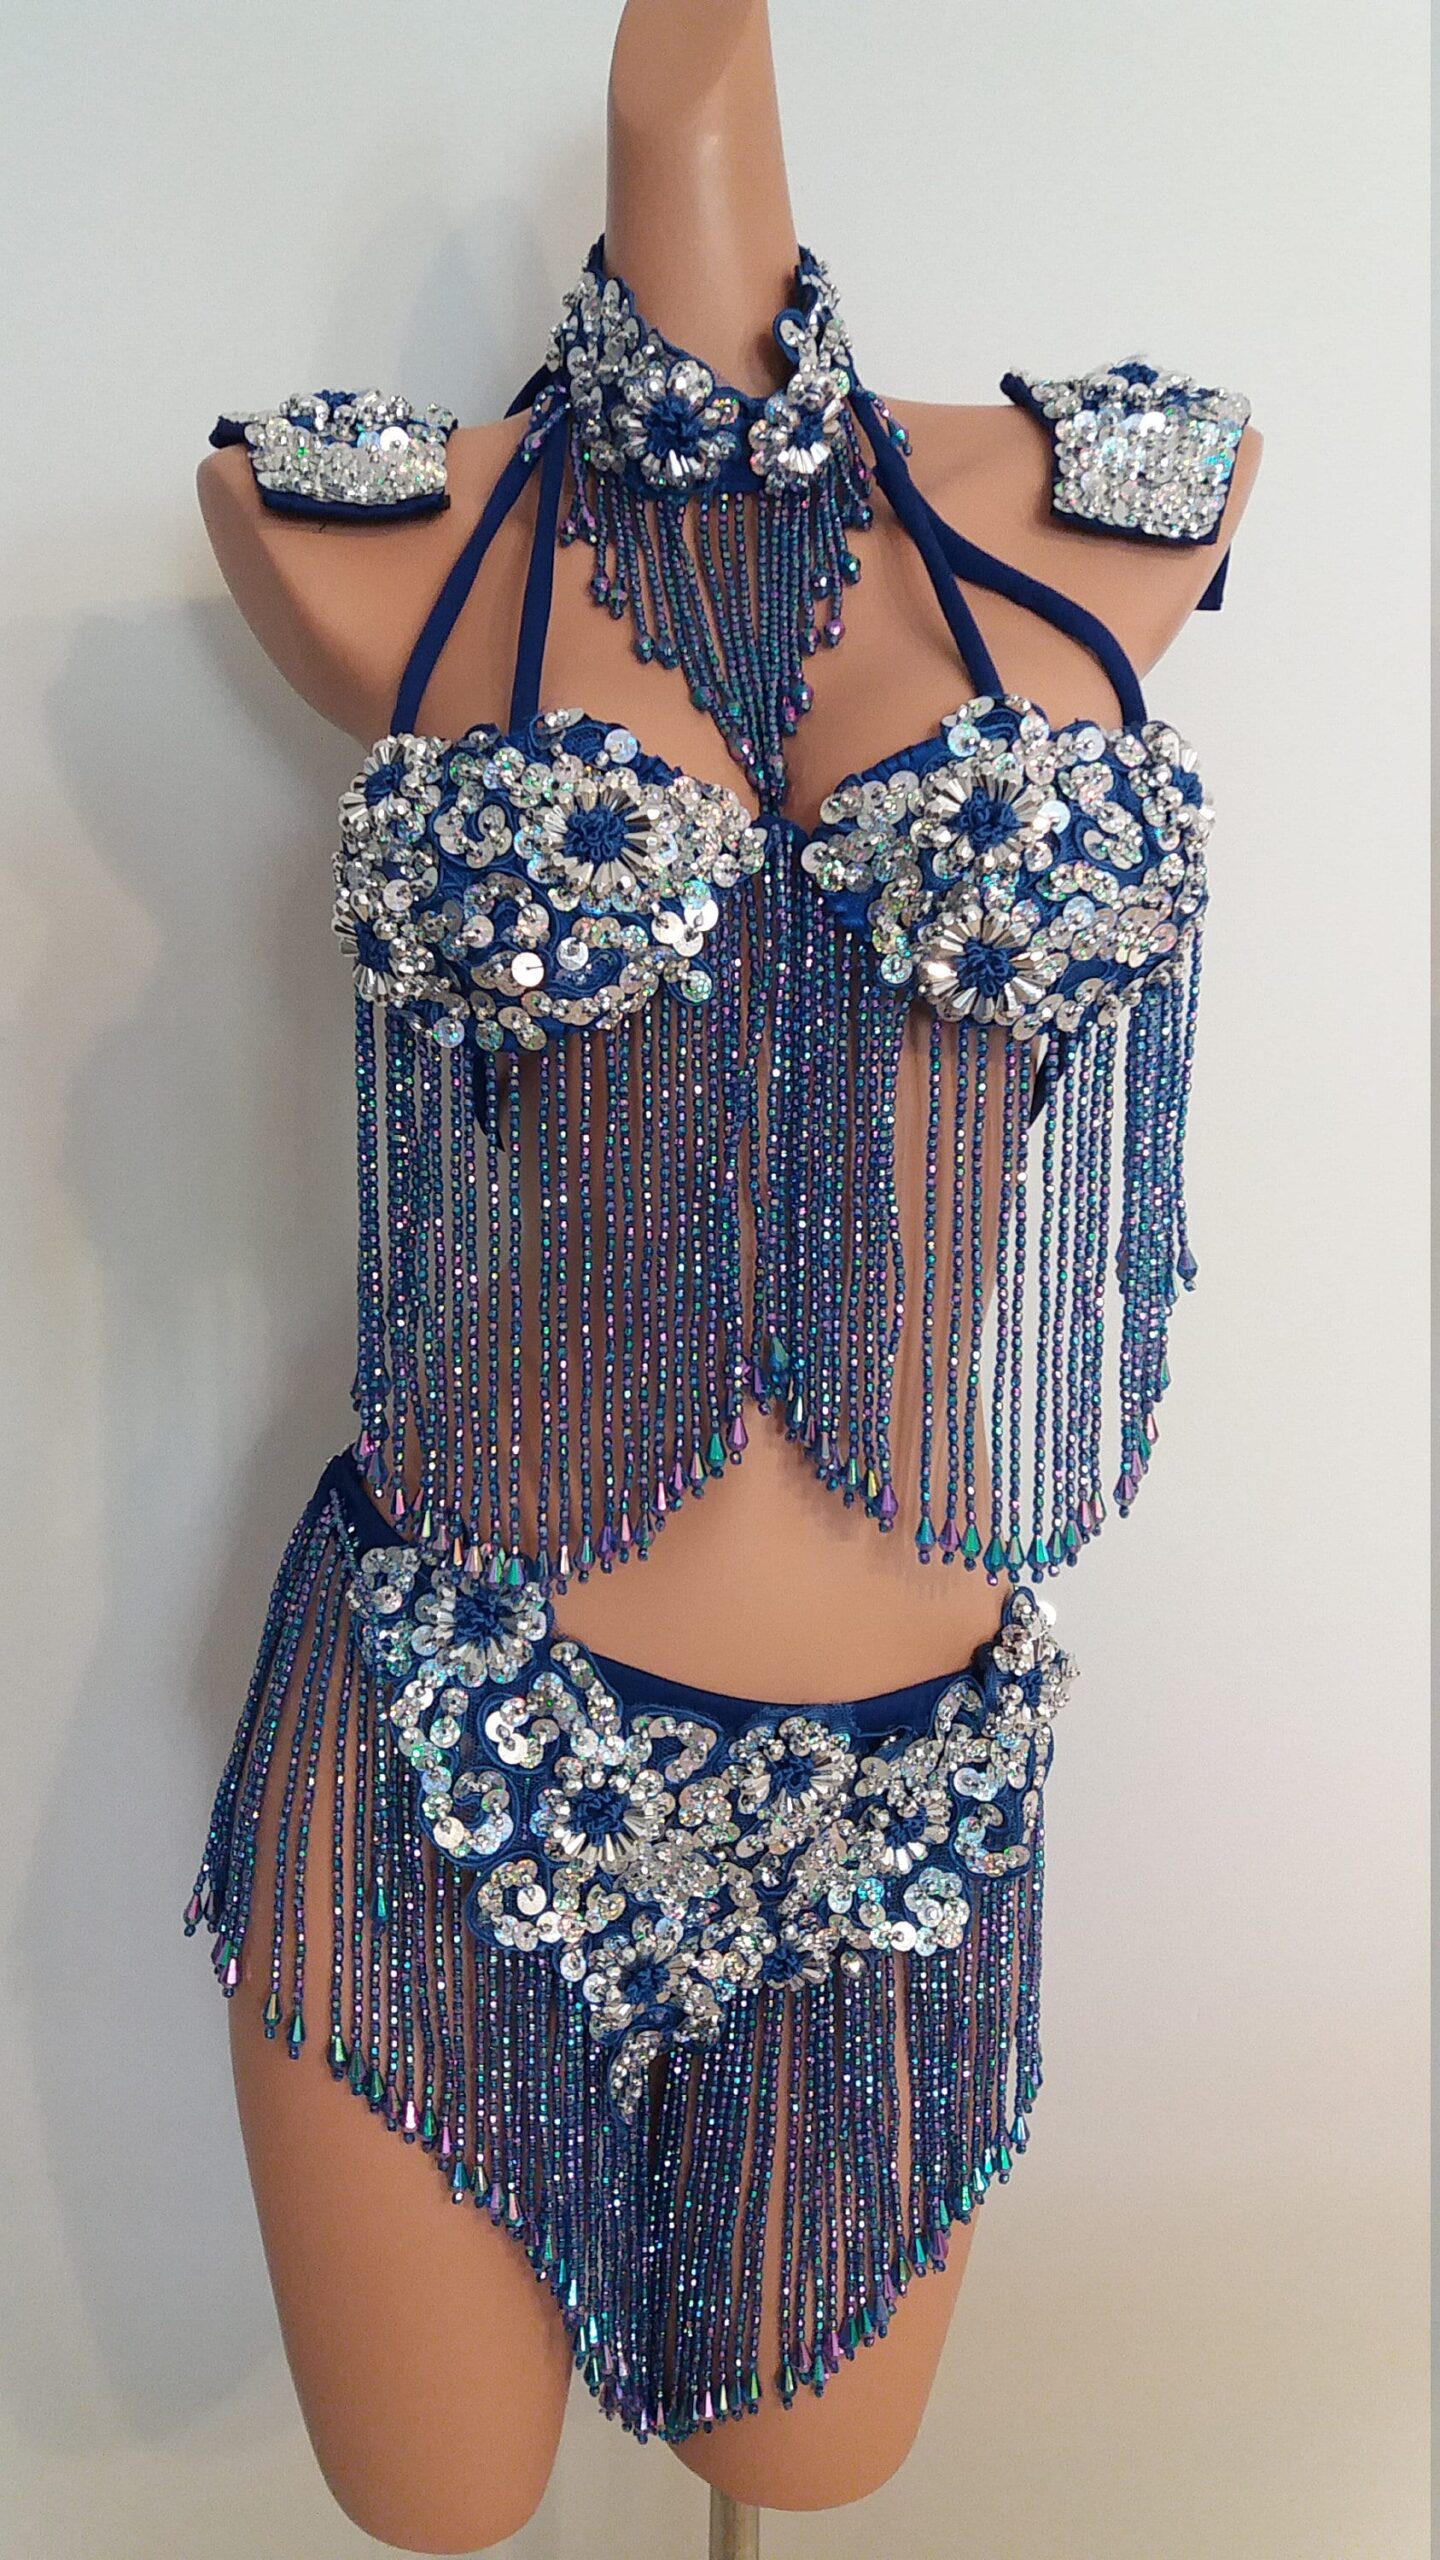 BLUE Sequin BIKINI-5 Piece Set Beads-Samba Costumes Carnival Show